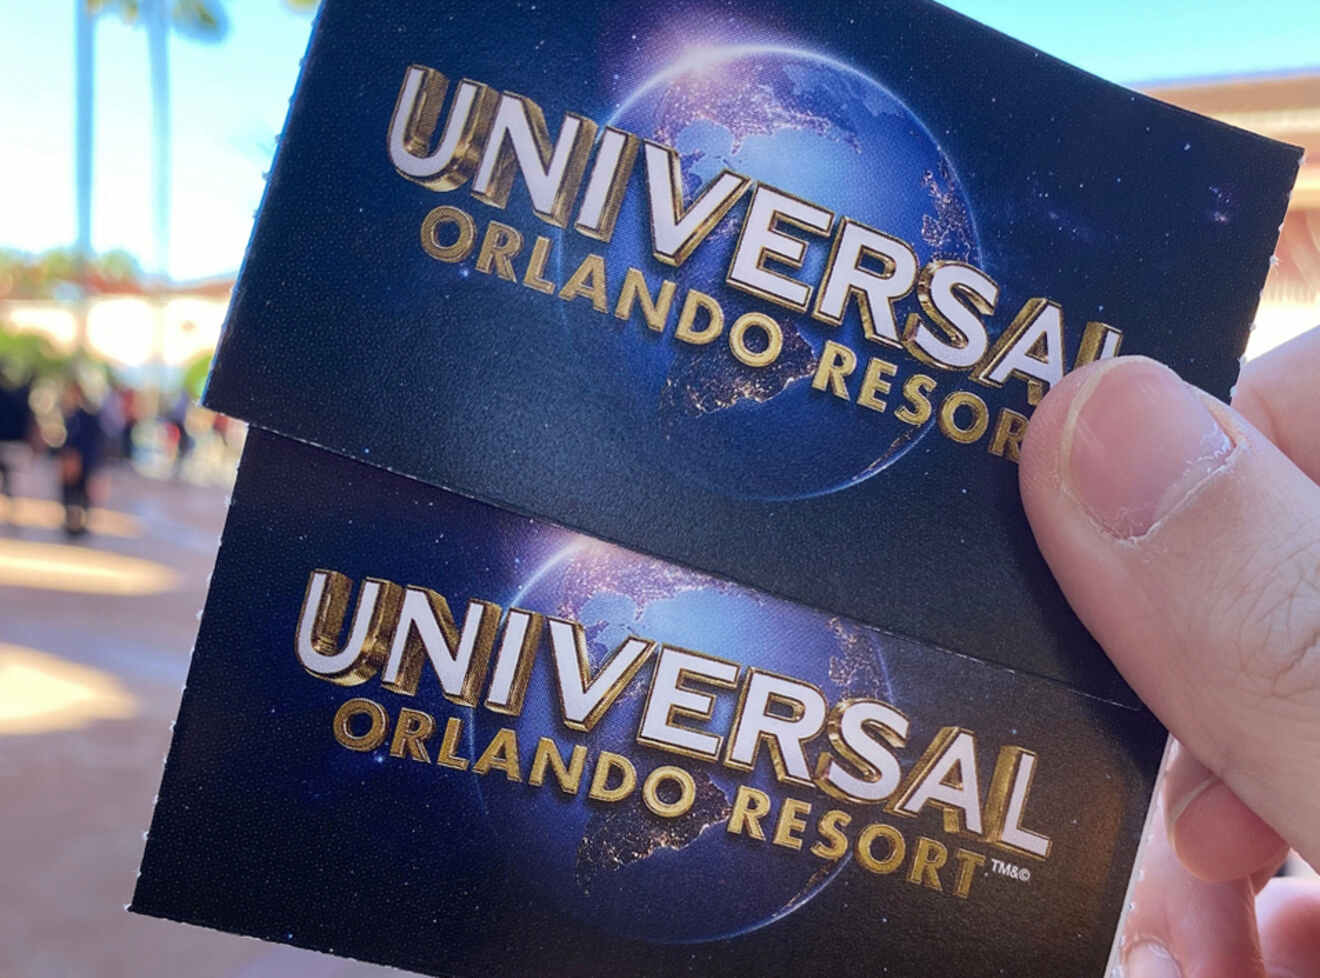 Tickets to Universal Orlando Resort